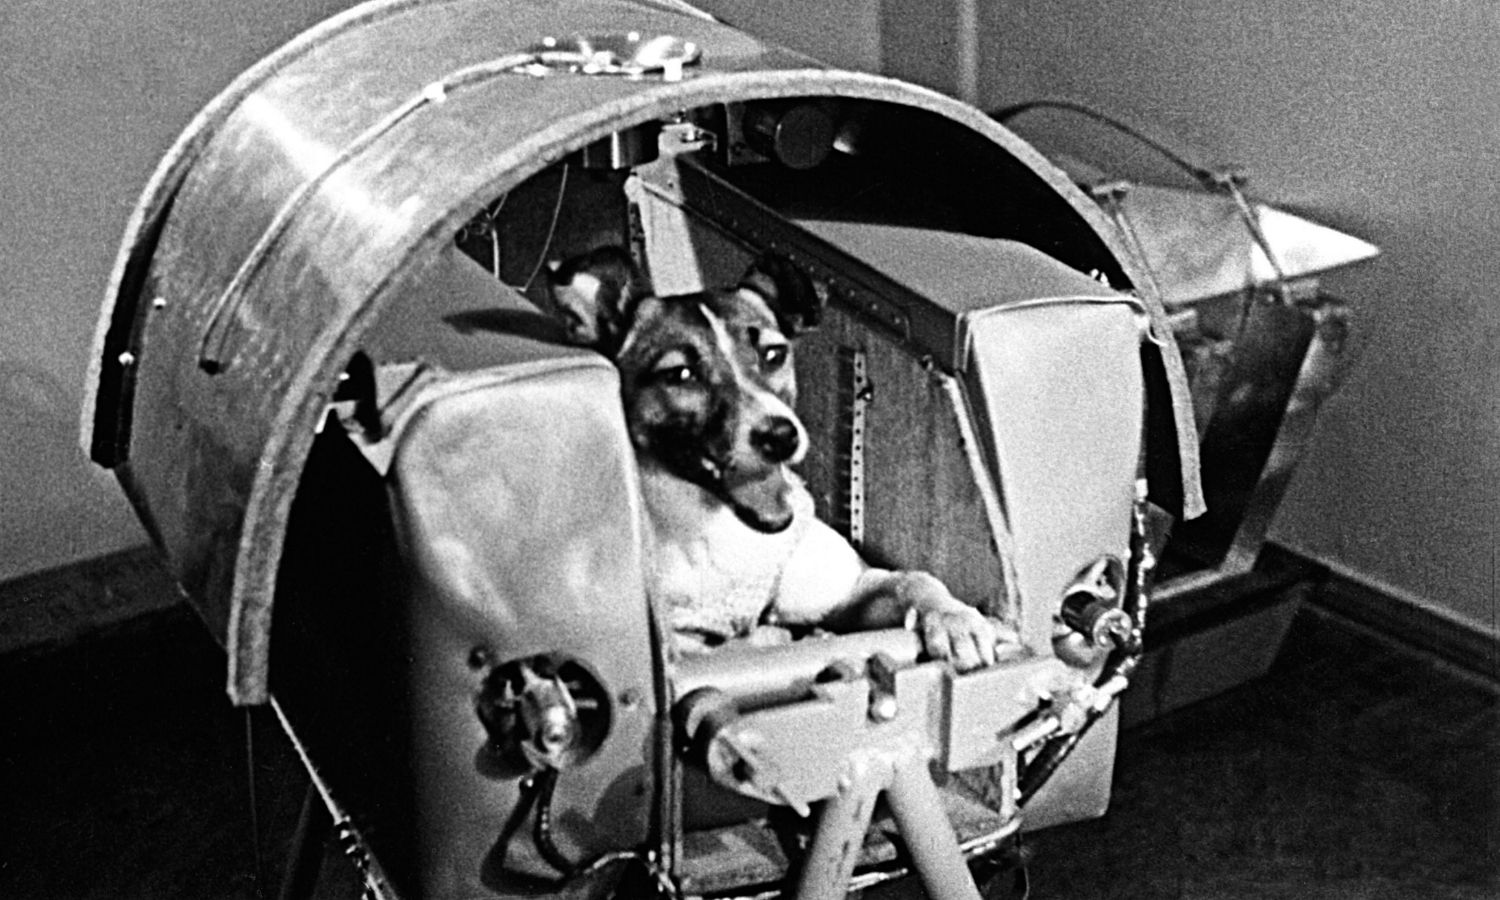 OTD in 1957: The Soviet Union sent a dog into space aboard spacecraft Sputnik II.